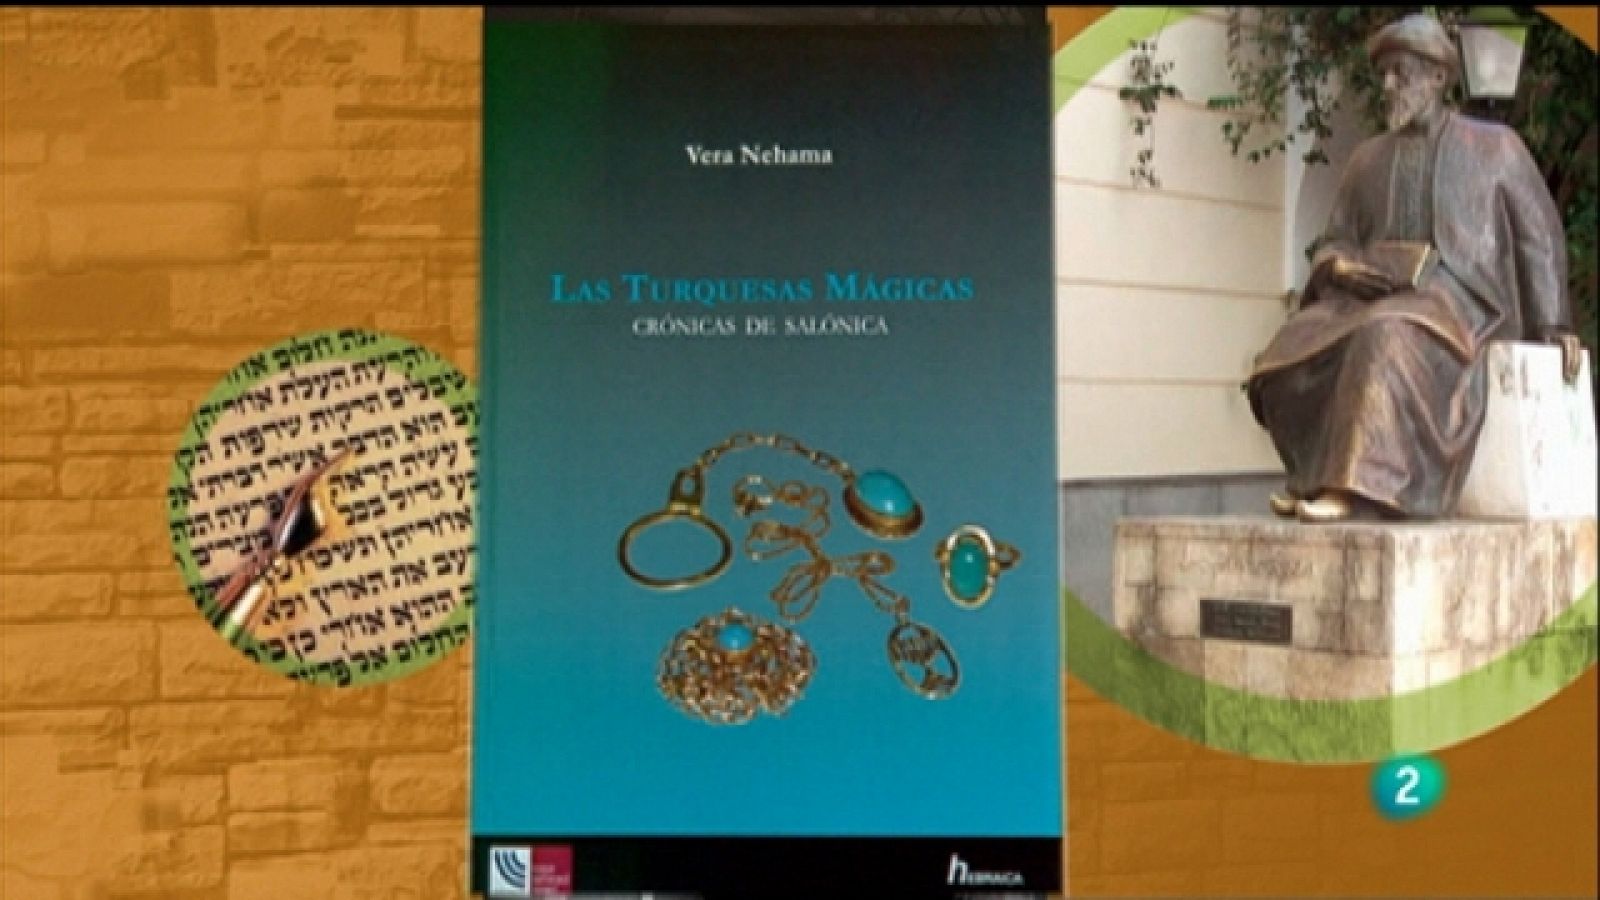 Shalom - "Las turquesas mágicas" Verónica Nehama